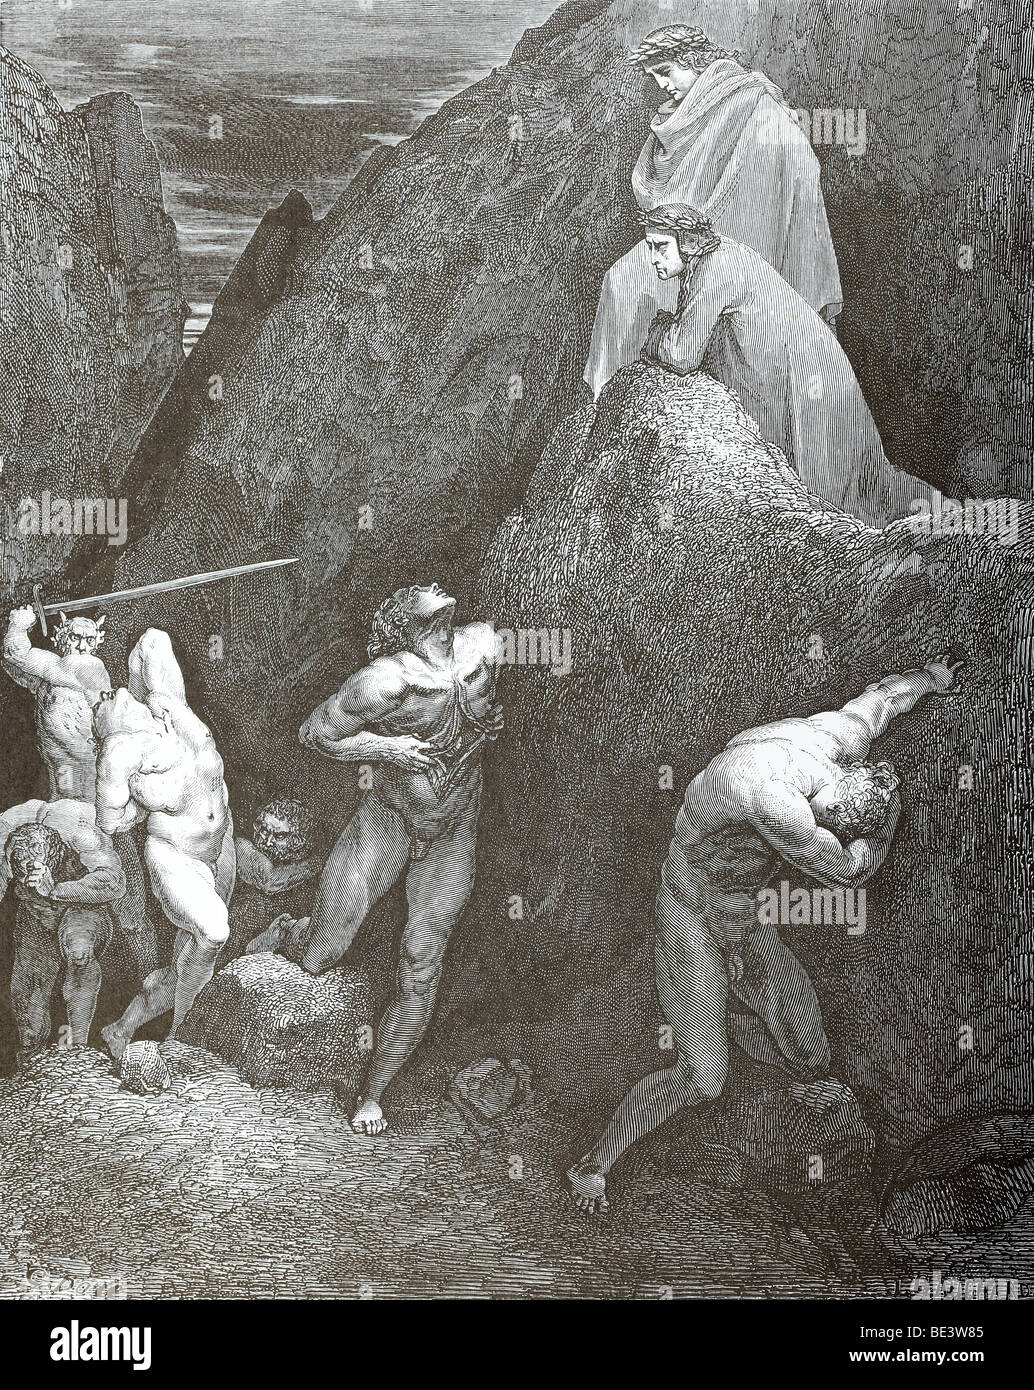 Illustration for Dante's Divine Comedy stock image